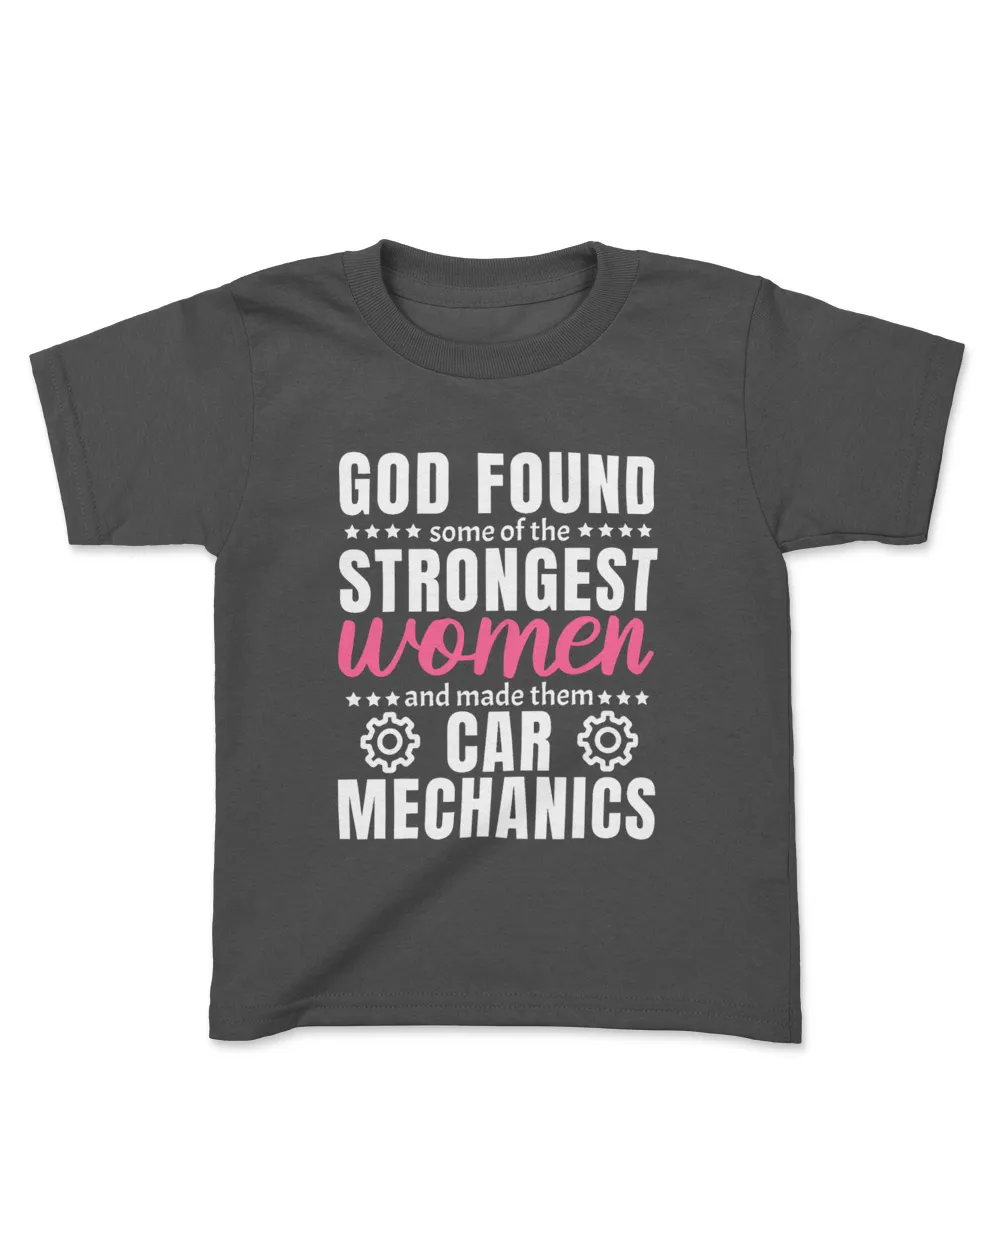 Car Mechanic